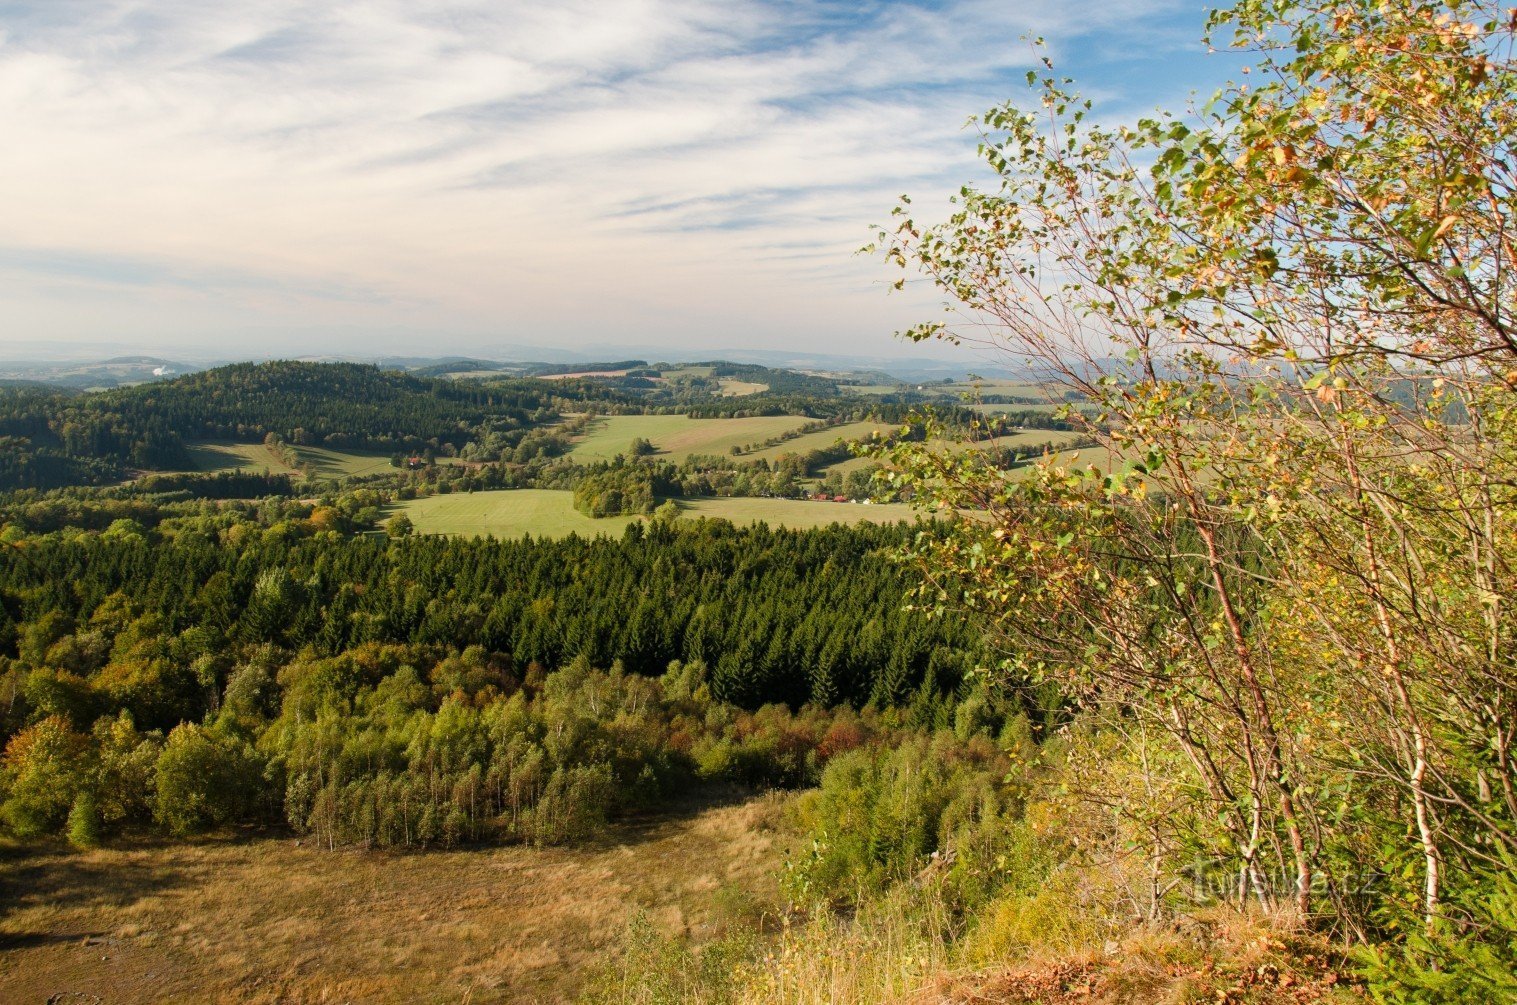 Špičák (841 m above sea level) - view from the edge of the quarry wall to Sedloňovská